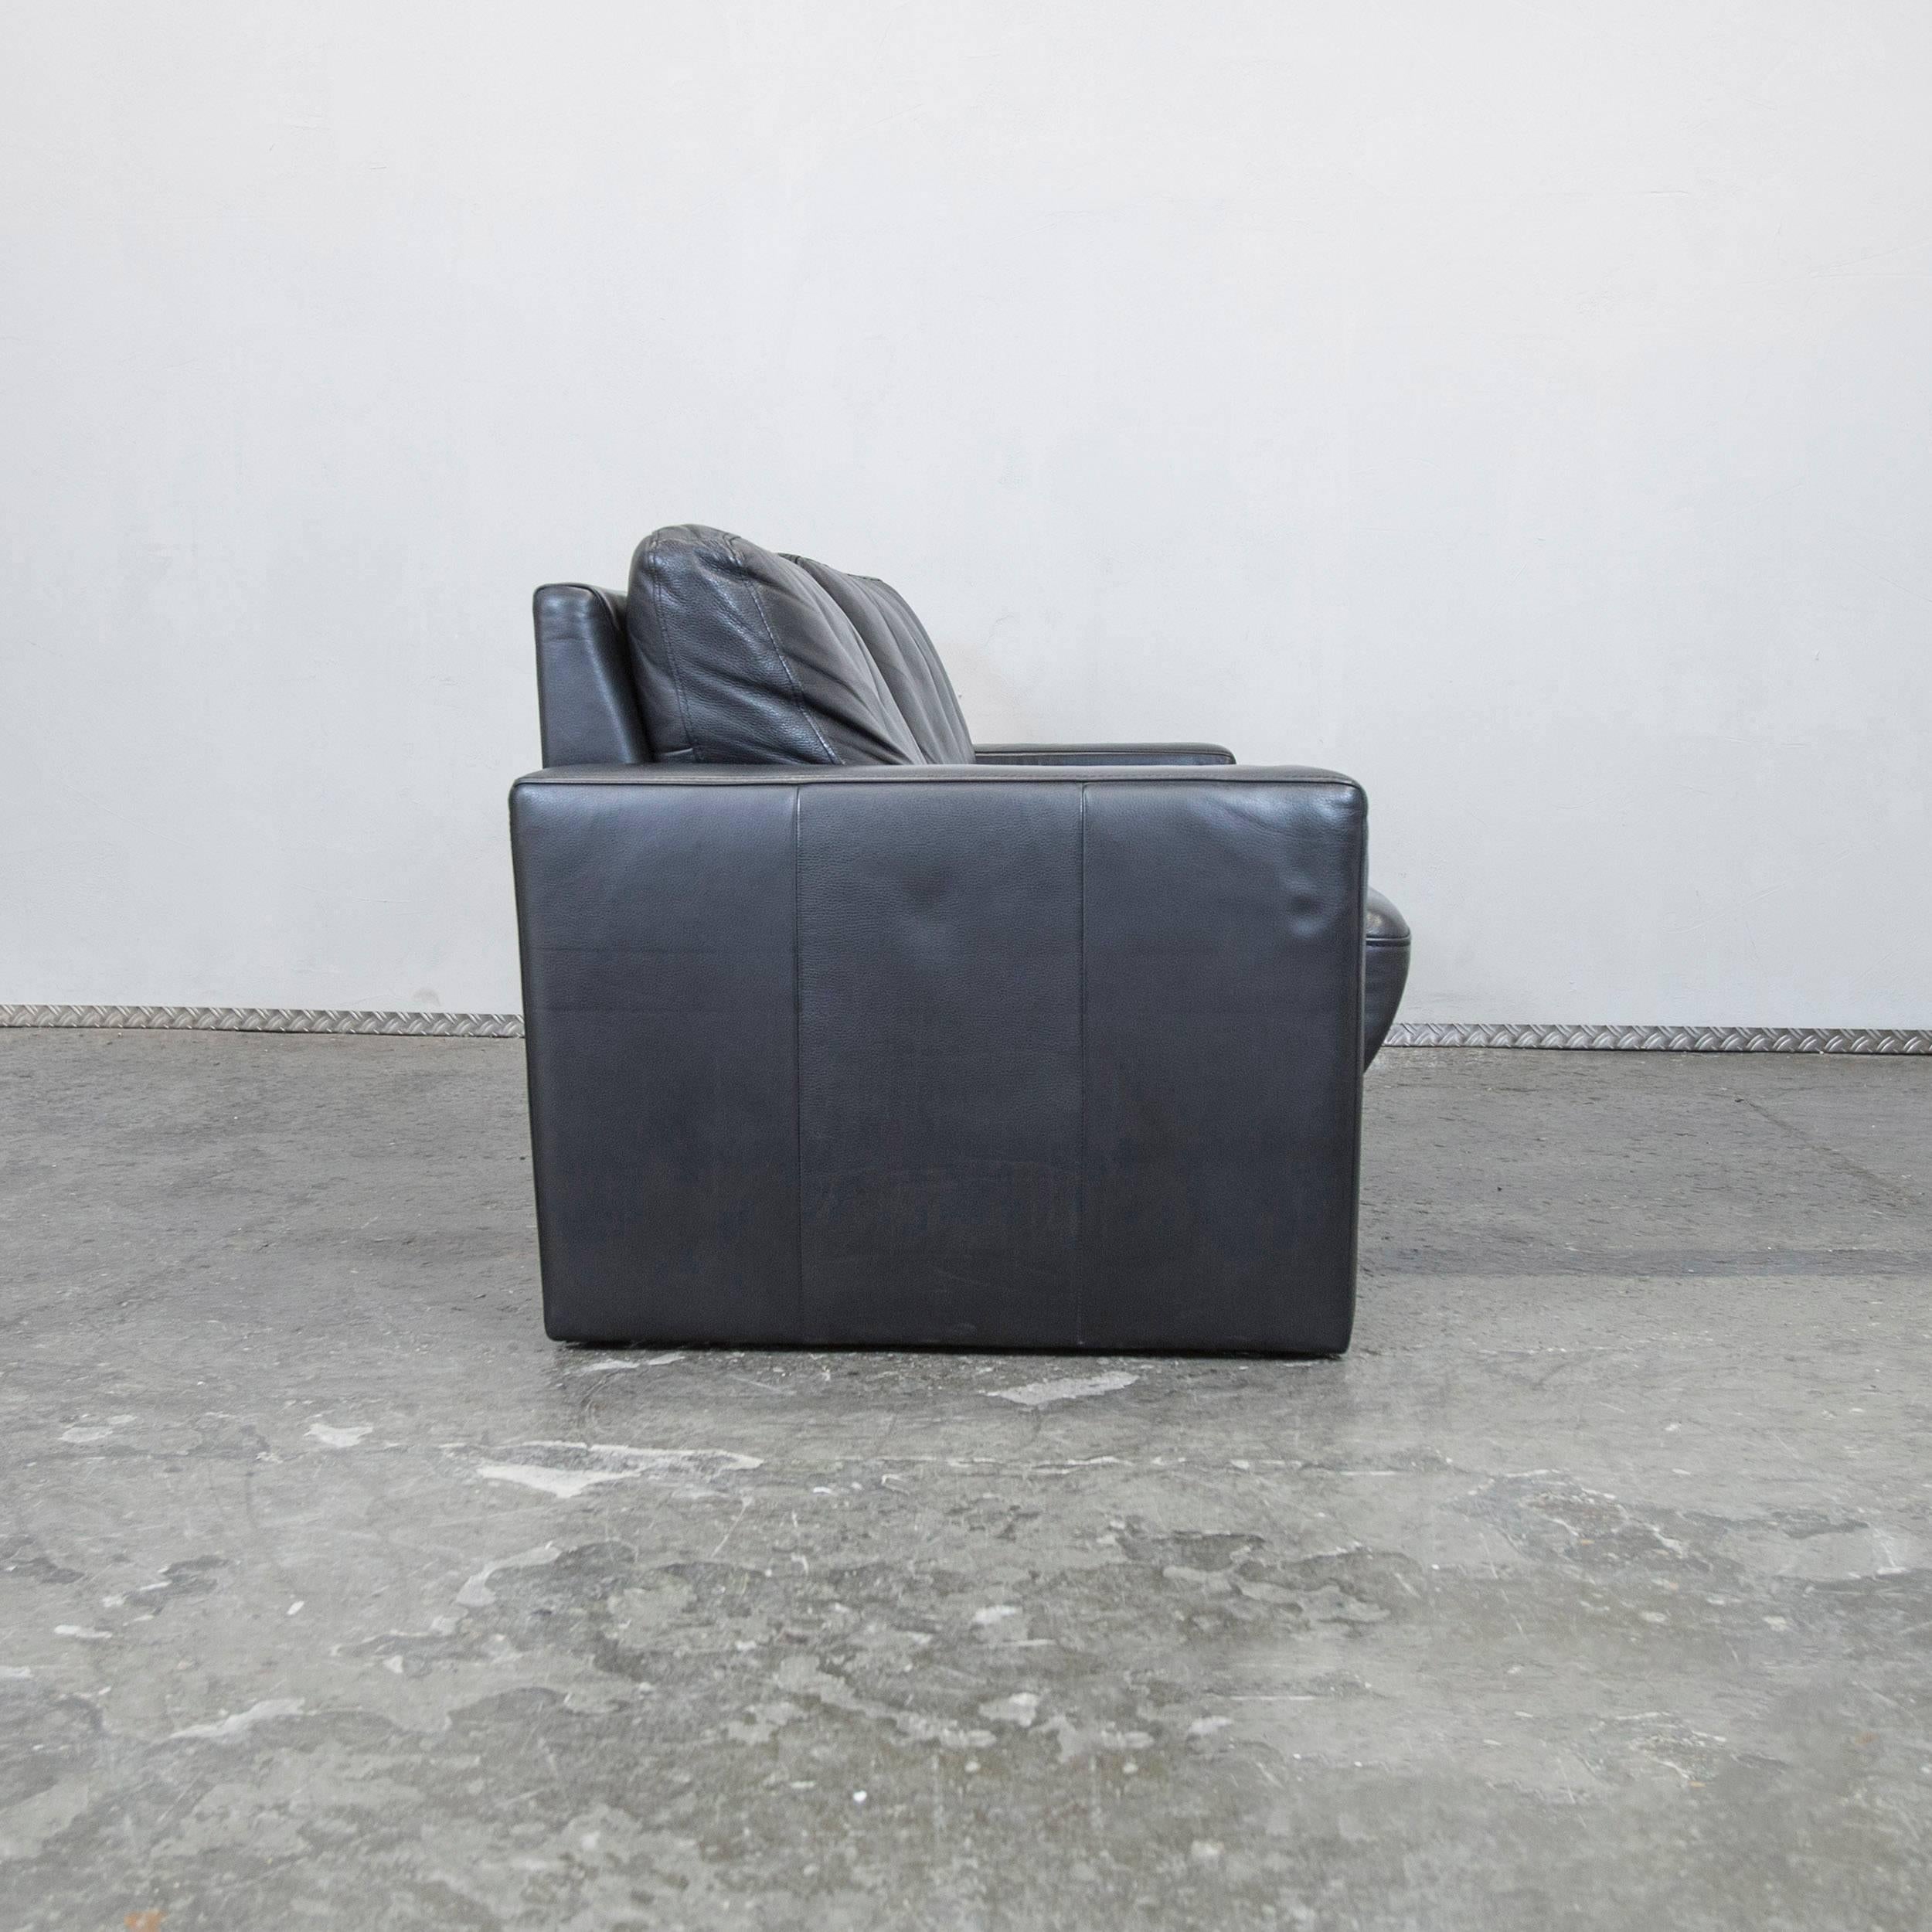 Külkens & Sohn Designer Leather Sofa Black Two-Seat Couch Modern For Sale 4